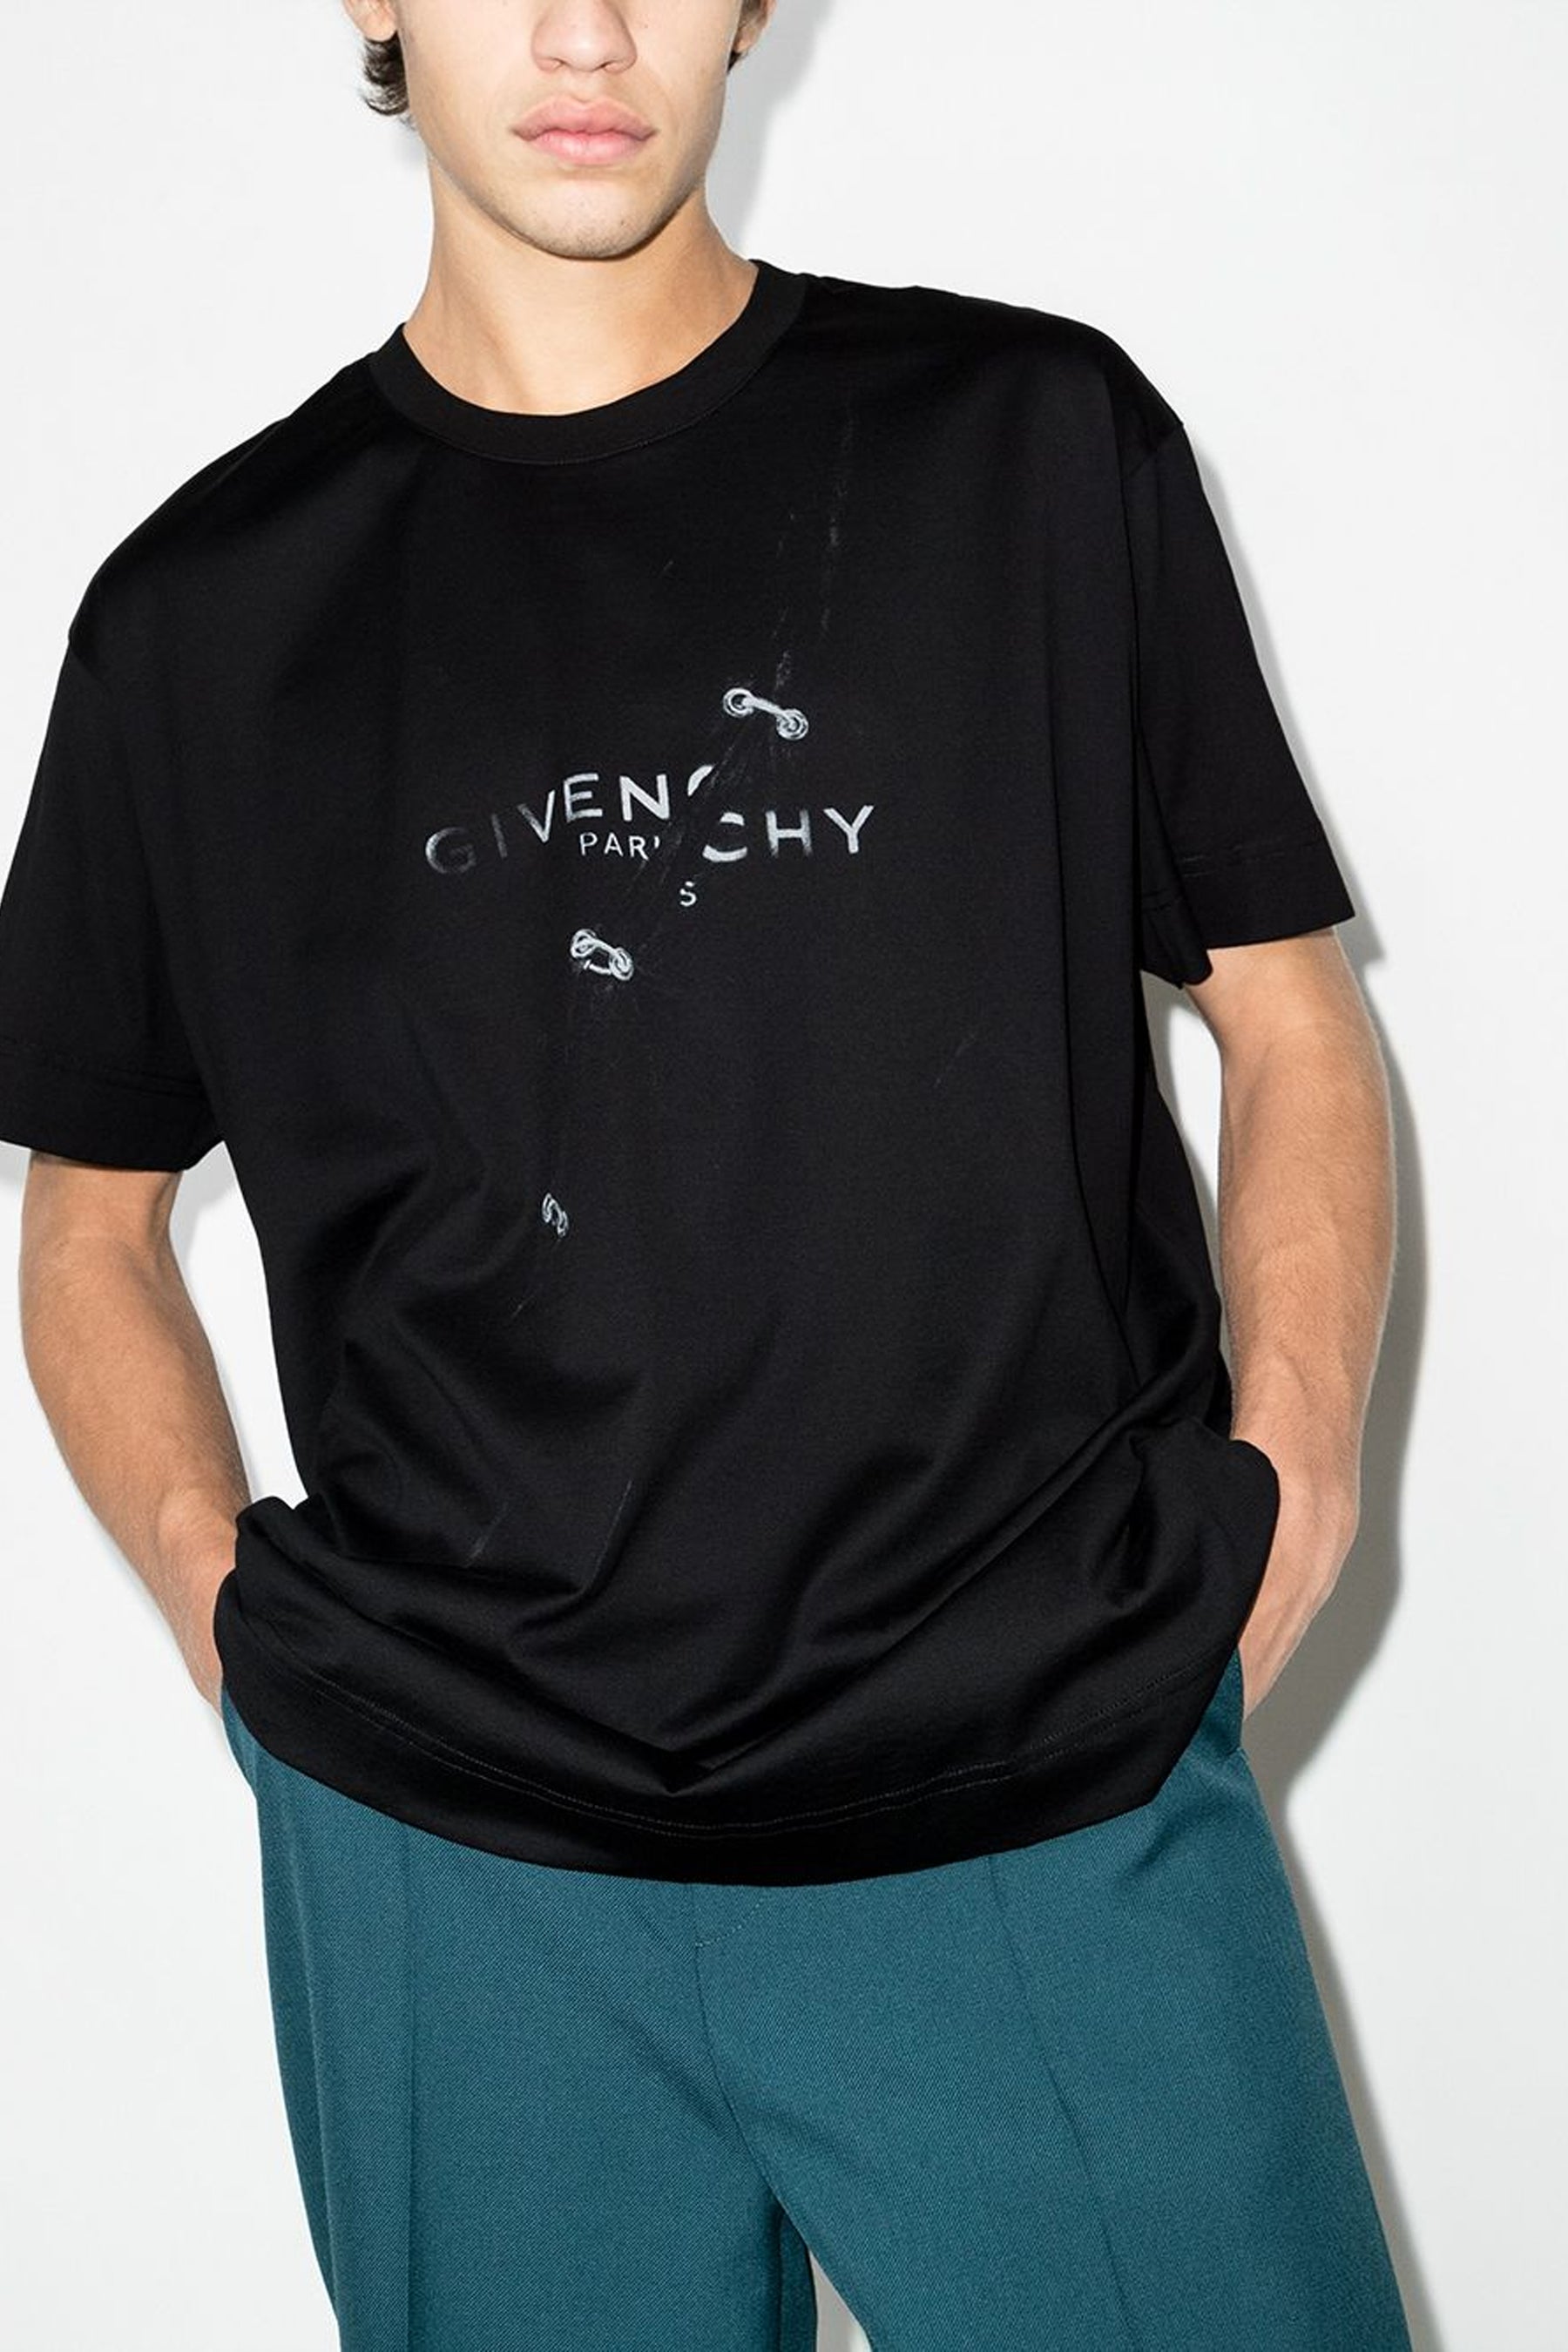 Givenchy trompe-l'oeil effect T-shirt